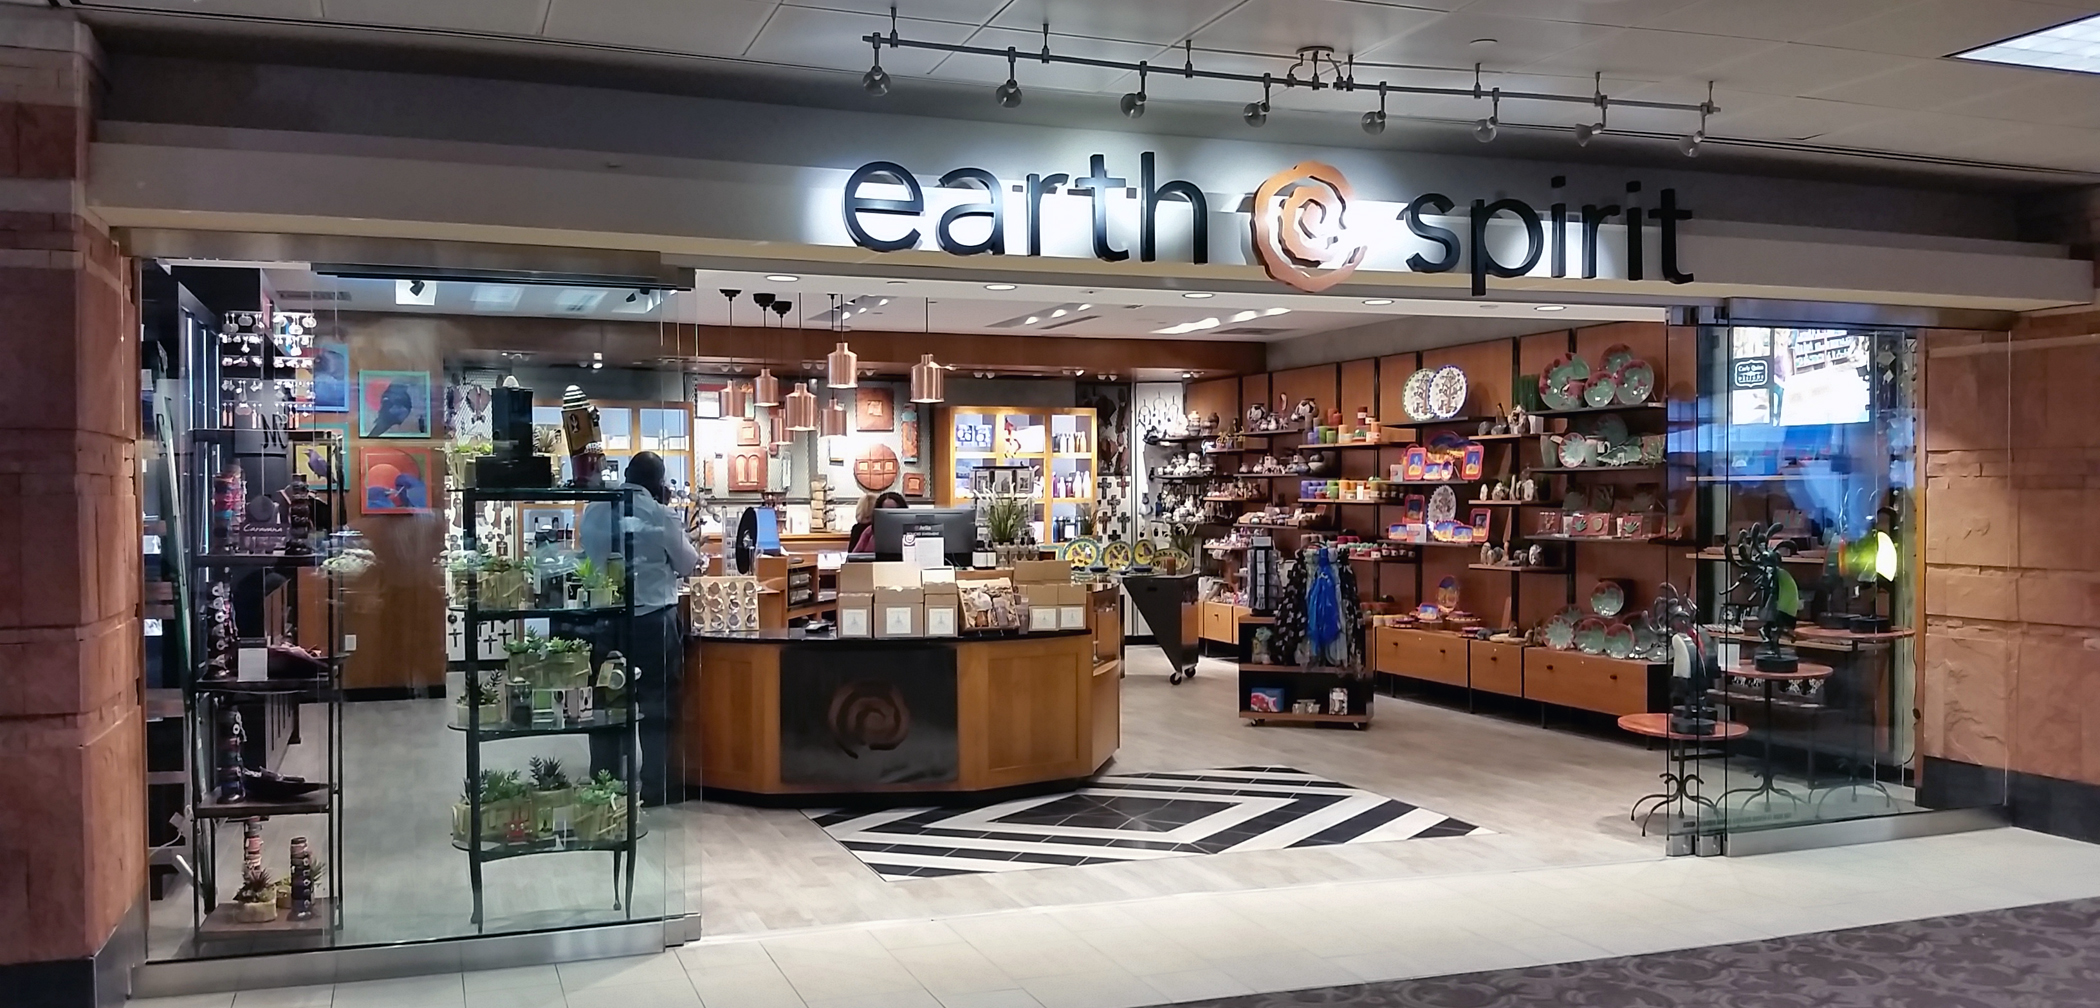 Earth & Spirit in Terminal 4